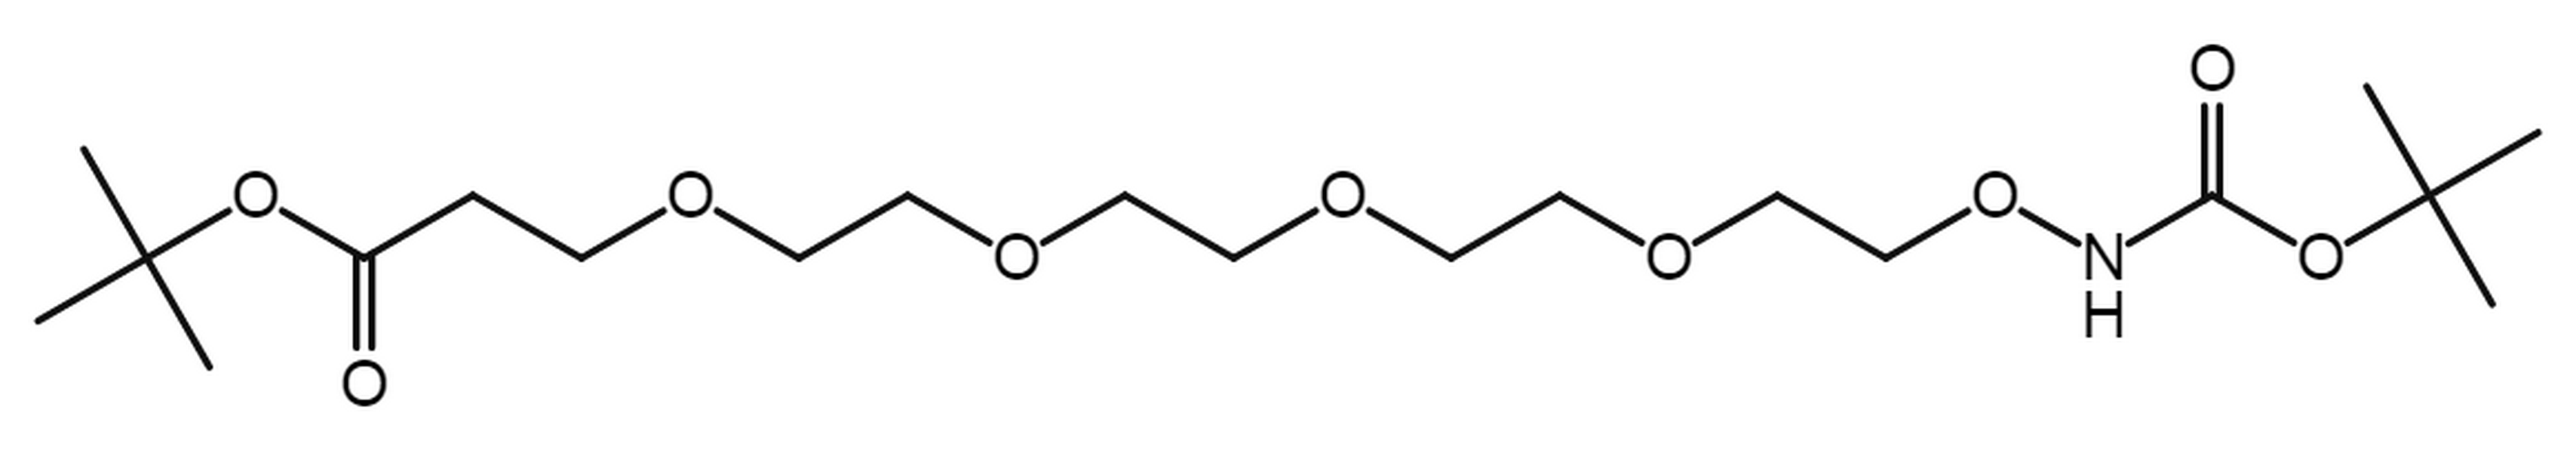 t-Boc-Aminooxy-PEG4-t-butyl ester